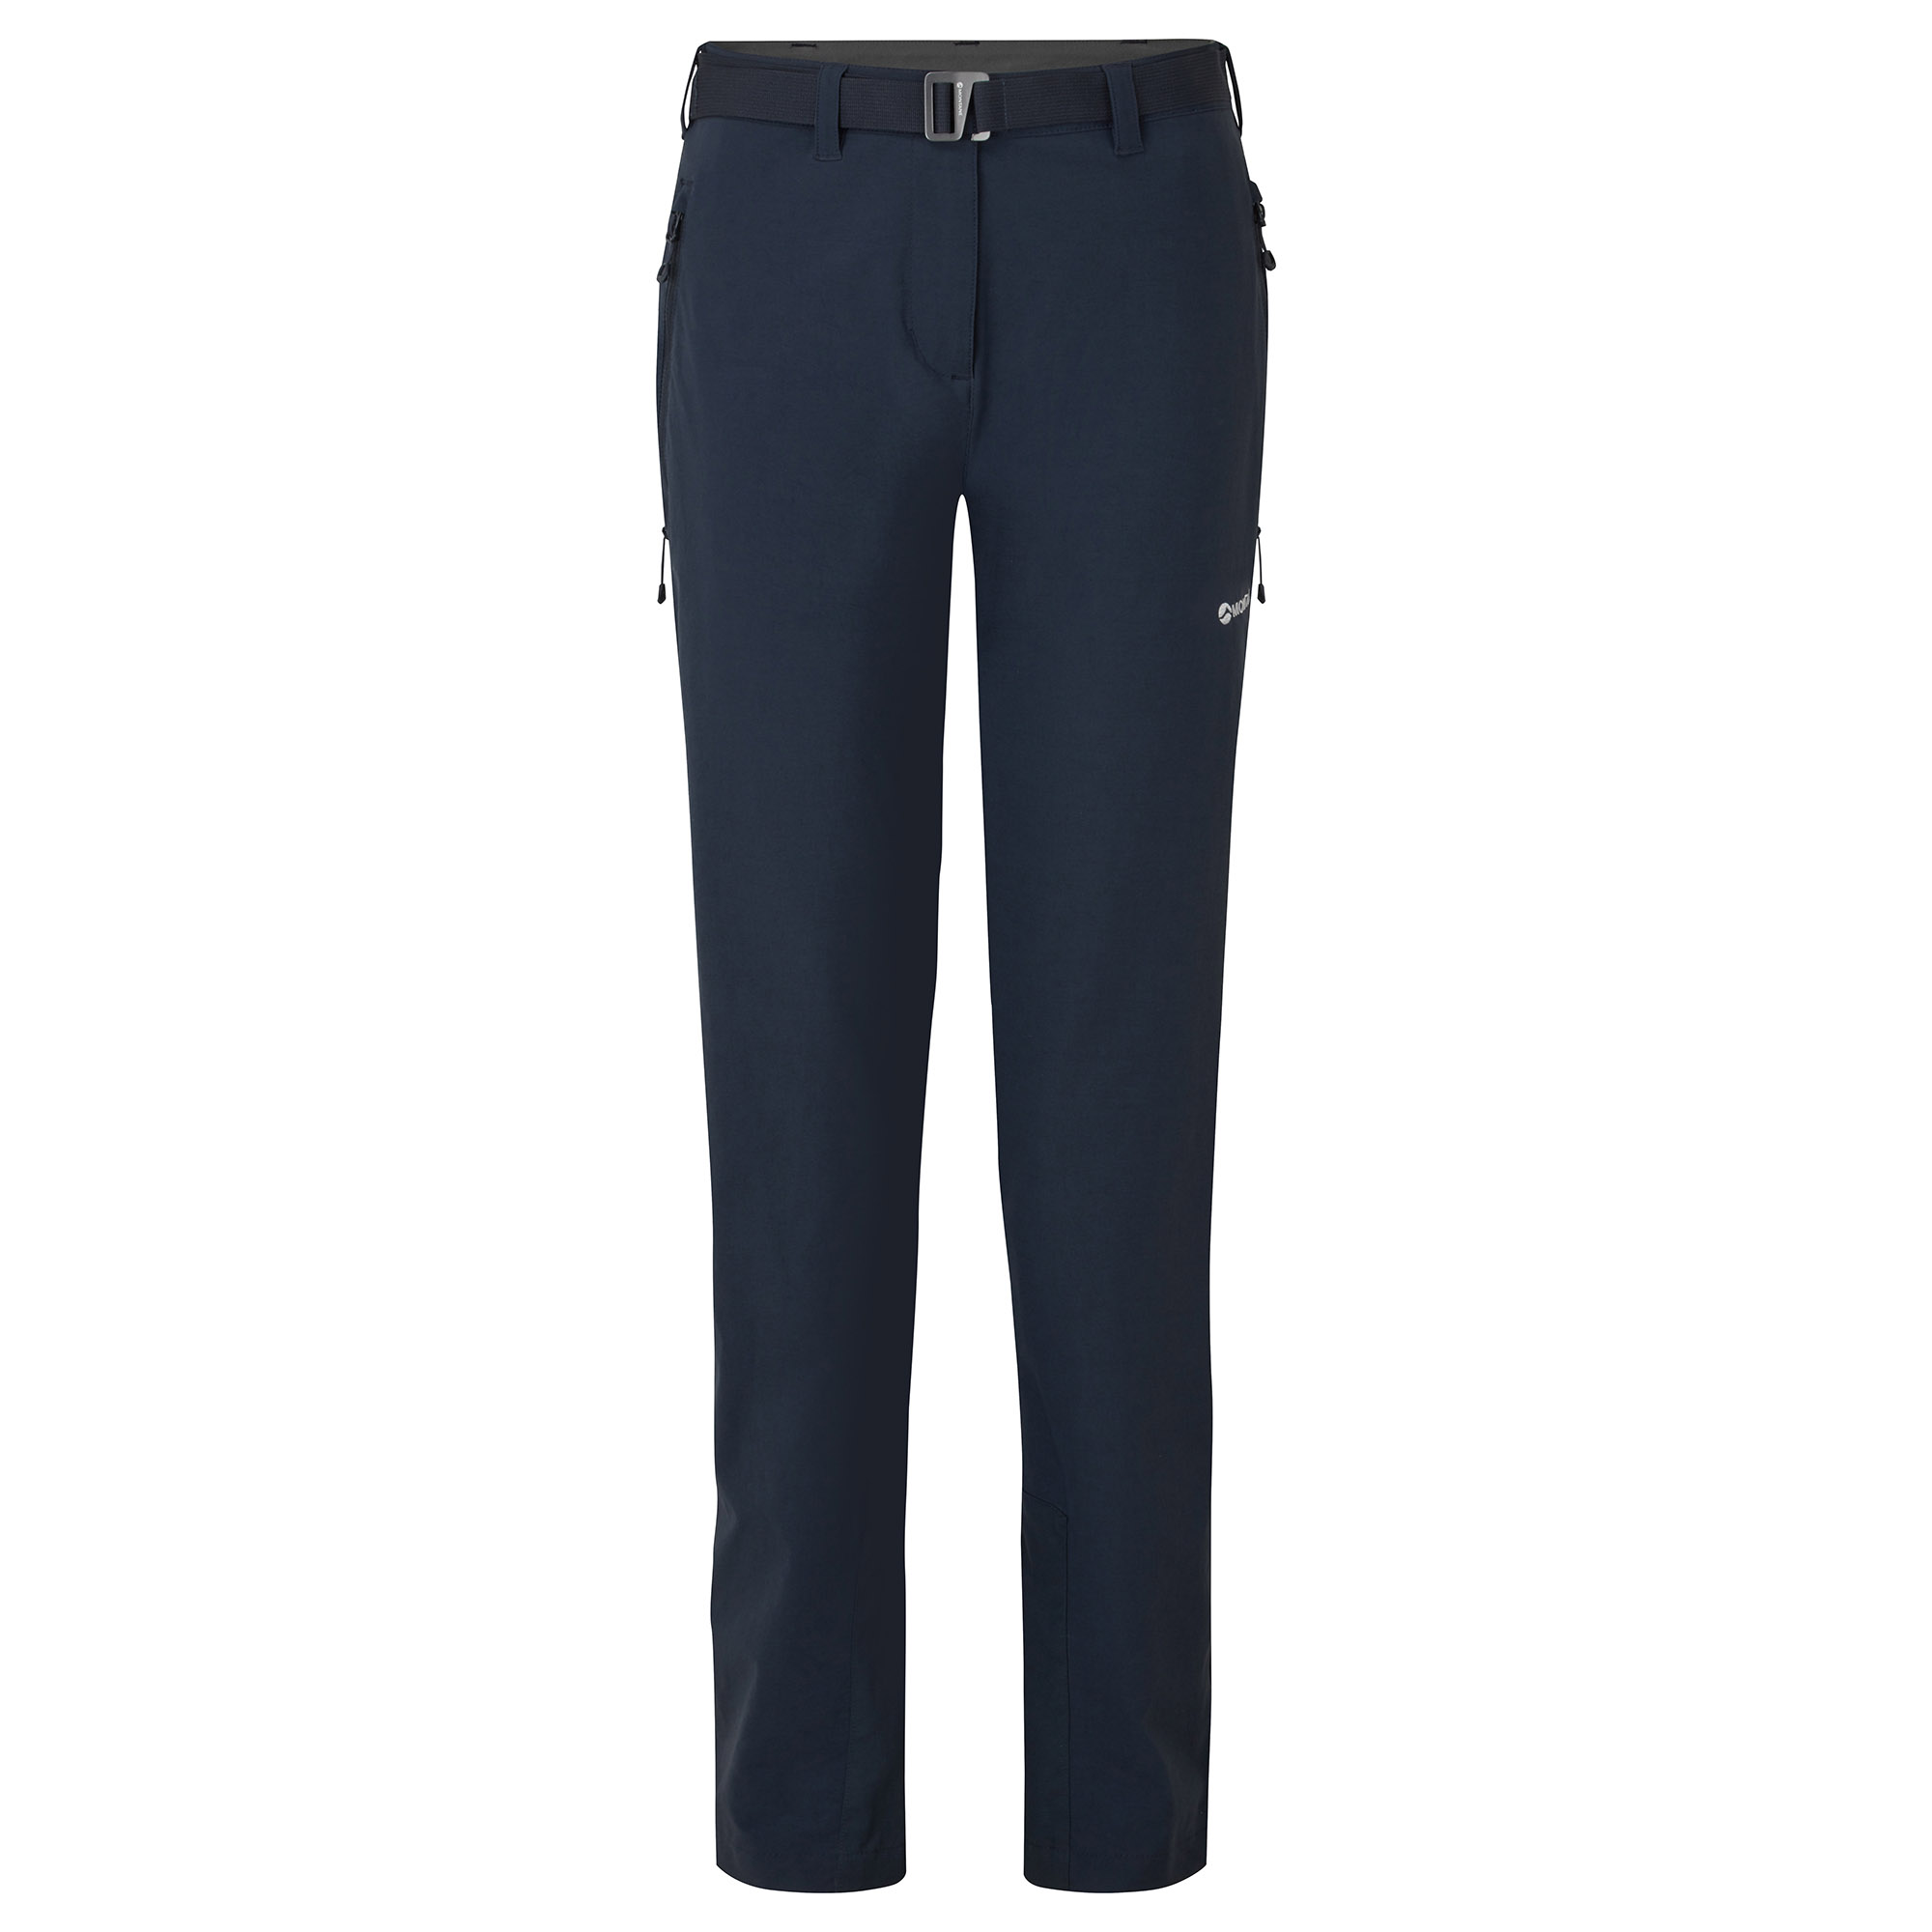 Montane FEM TERRA STRETCH PANTS REG LEG-ECLIPSE BLUE-UK16/XL dámské kalhoty modré